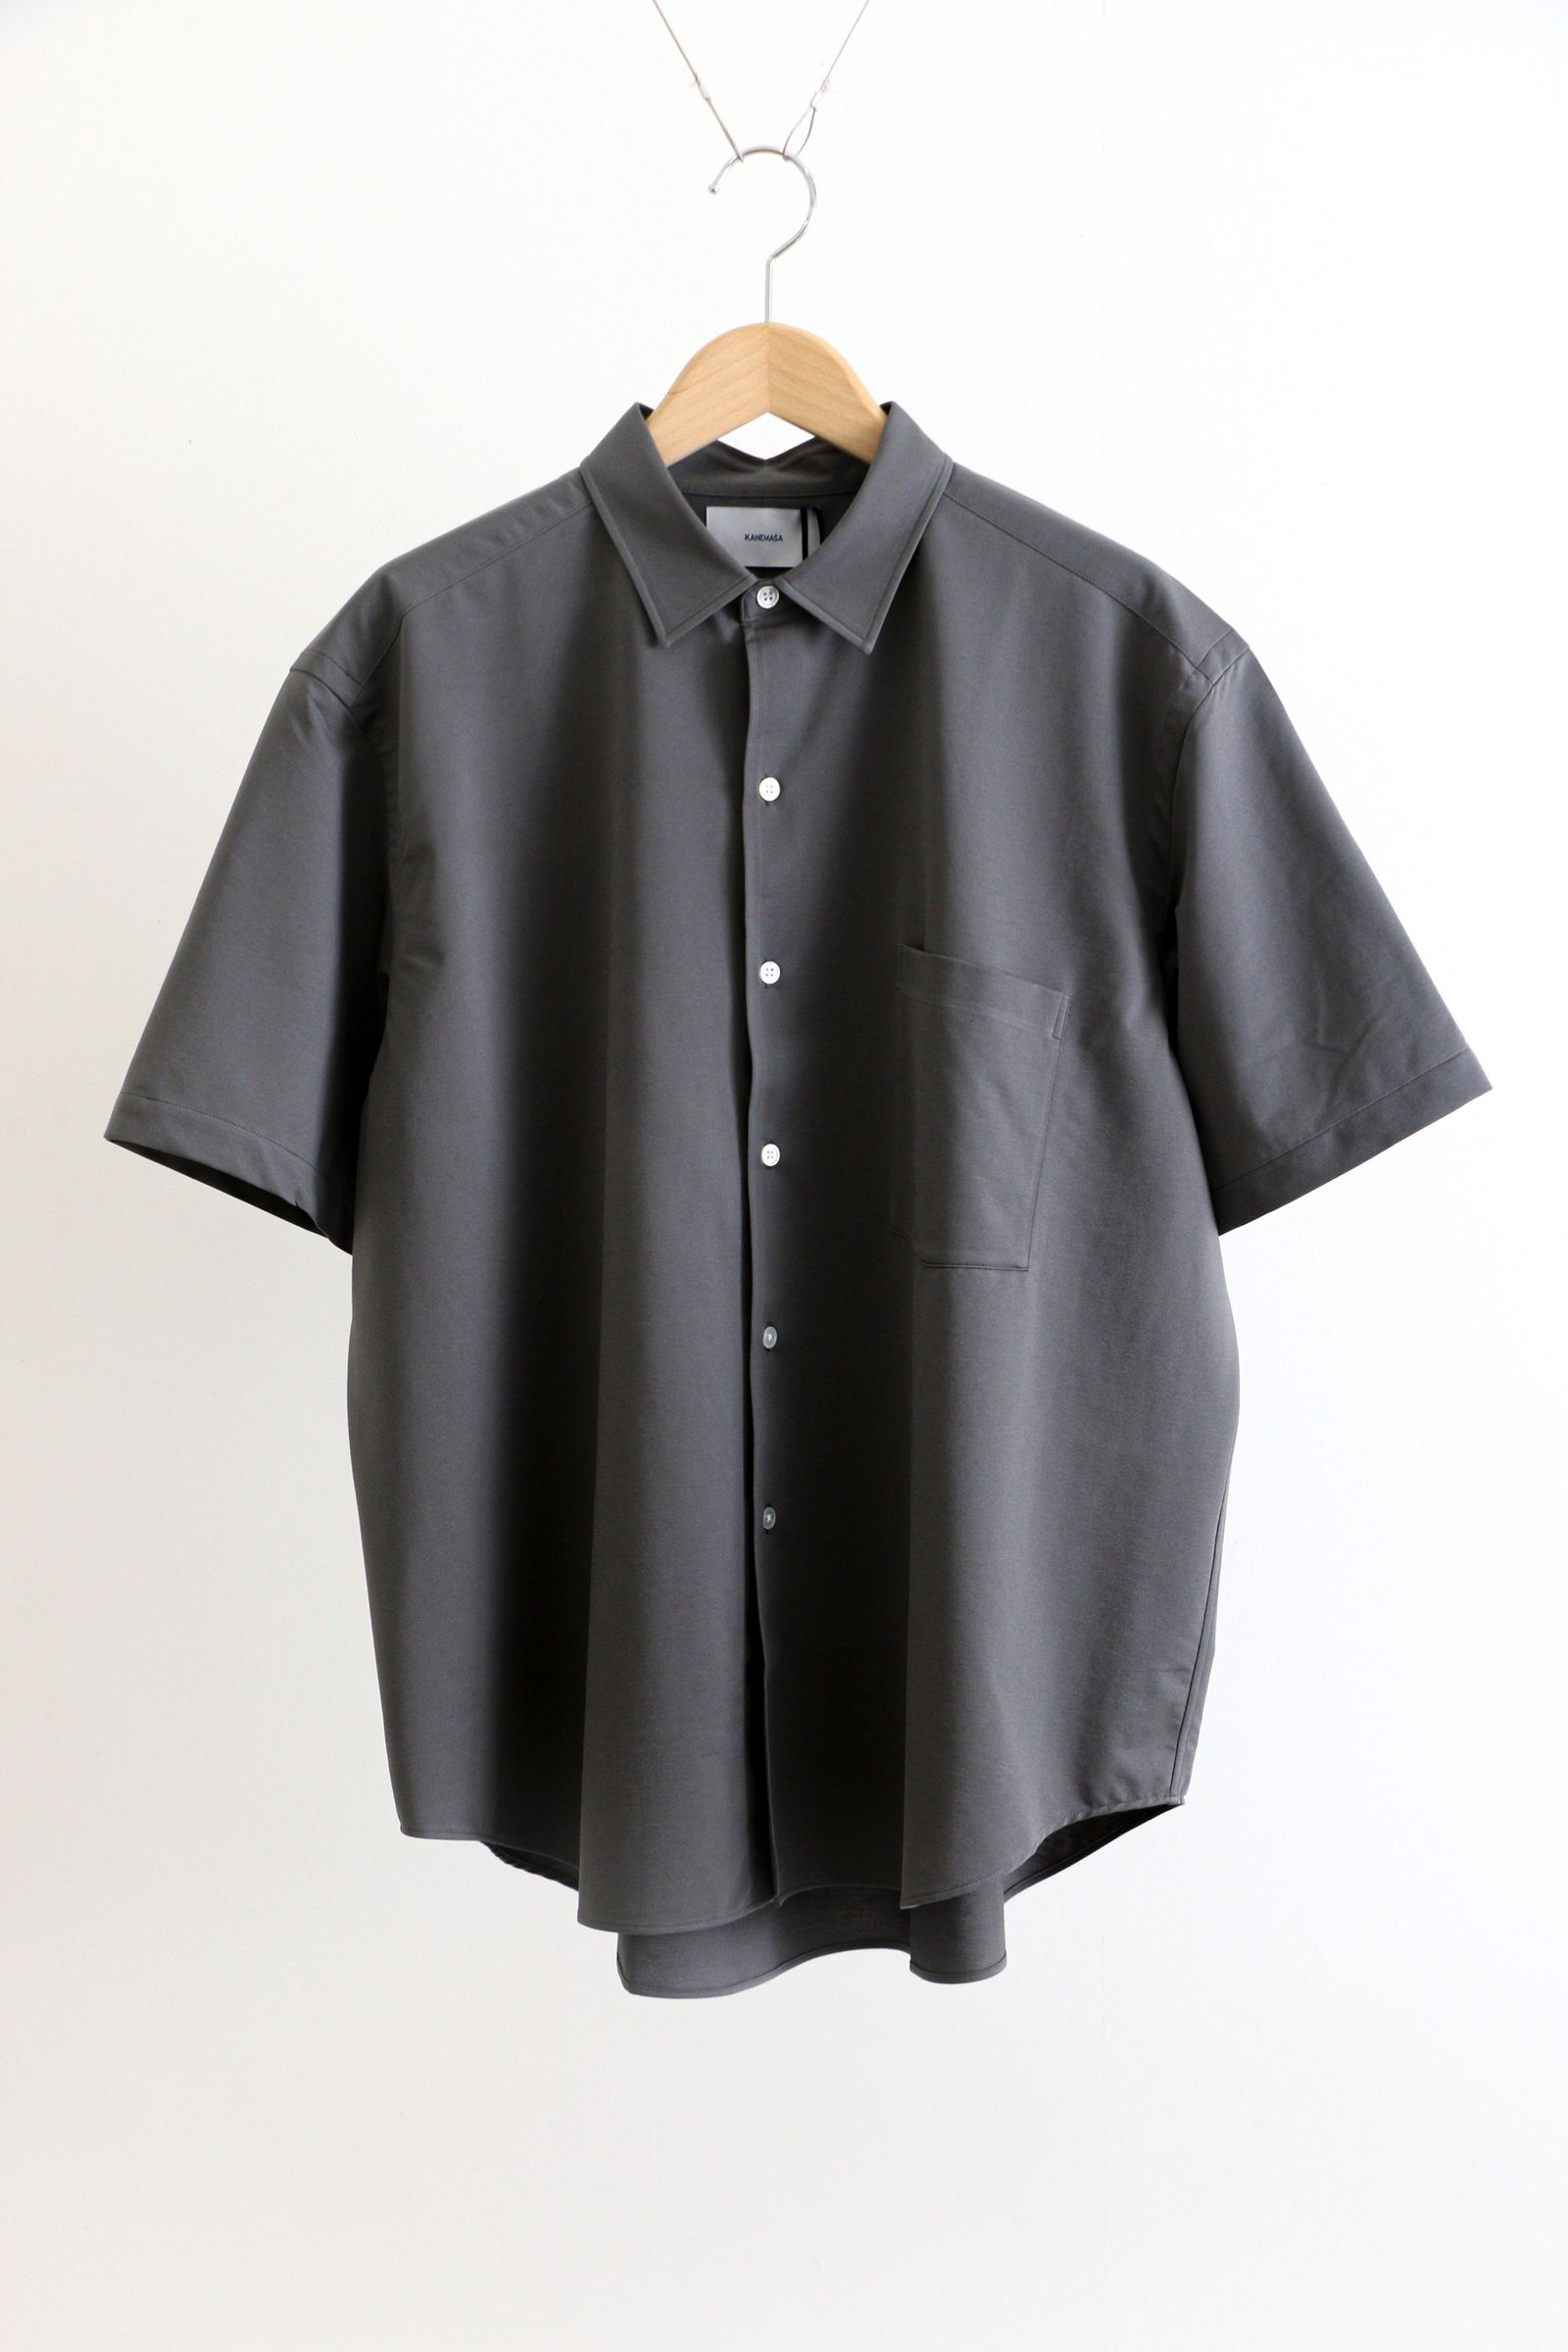 KANEMASA PHIL. - Royal Ox Dress Jersey Short Sleeve Shirt GRAY